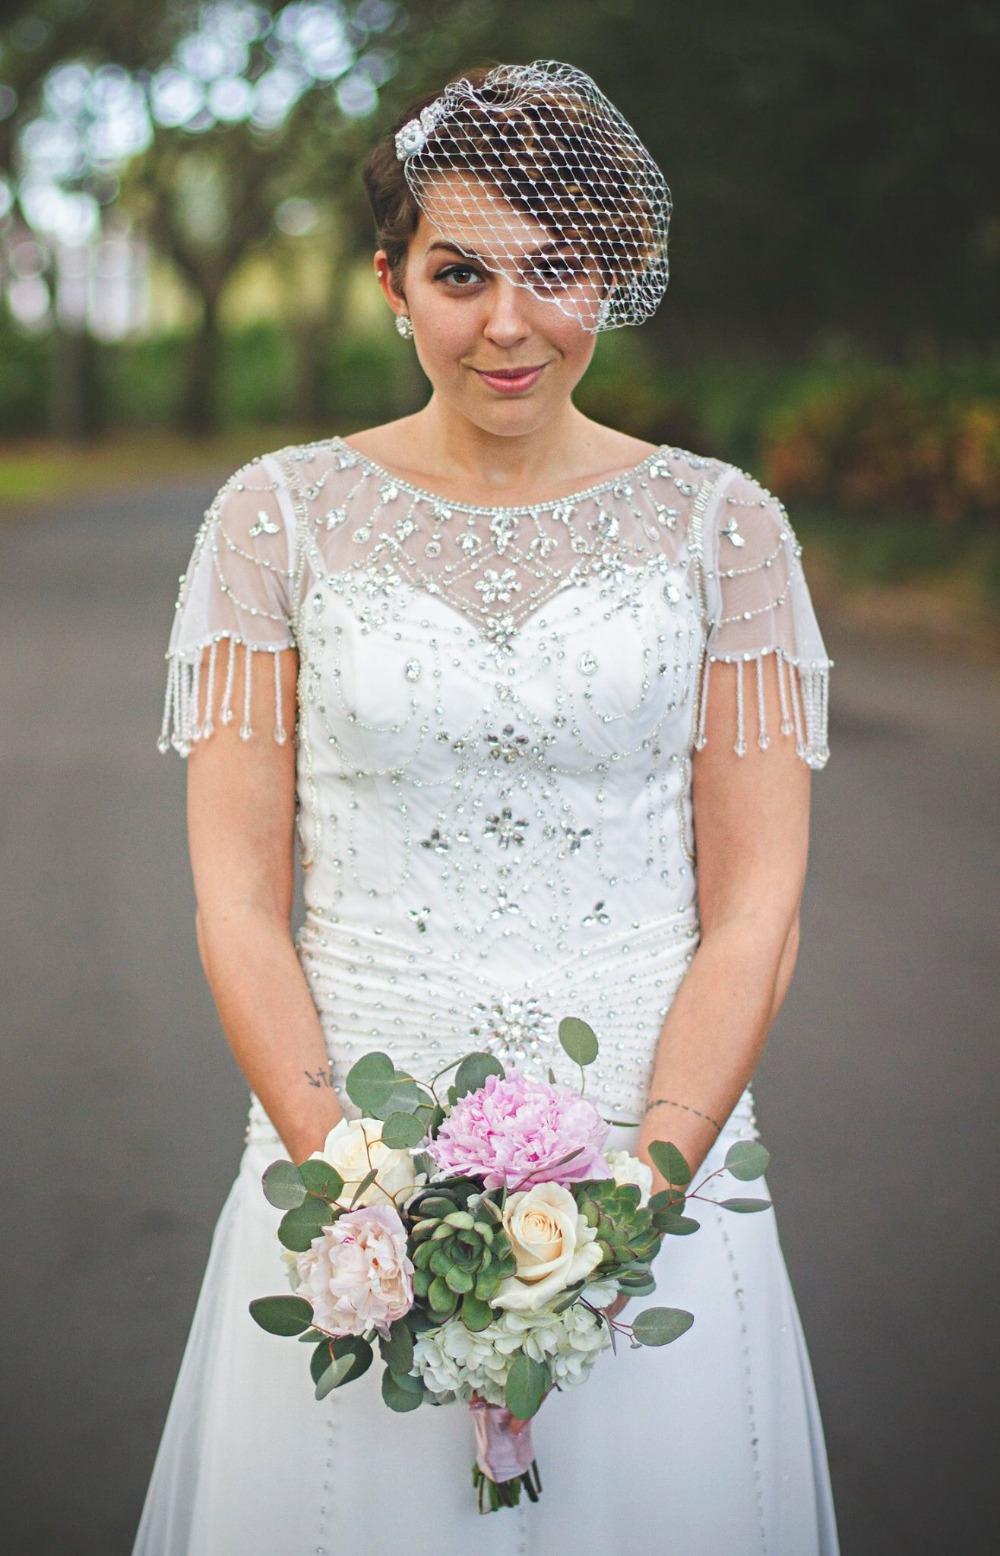 ashleys-wedding-dress-vintage-boho-ieiedress (6)